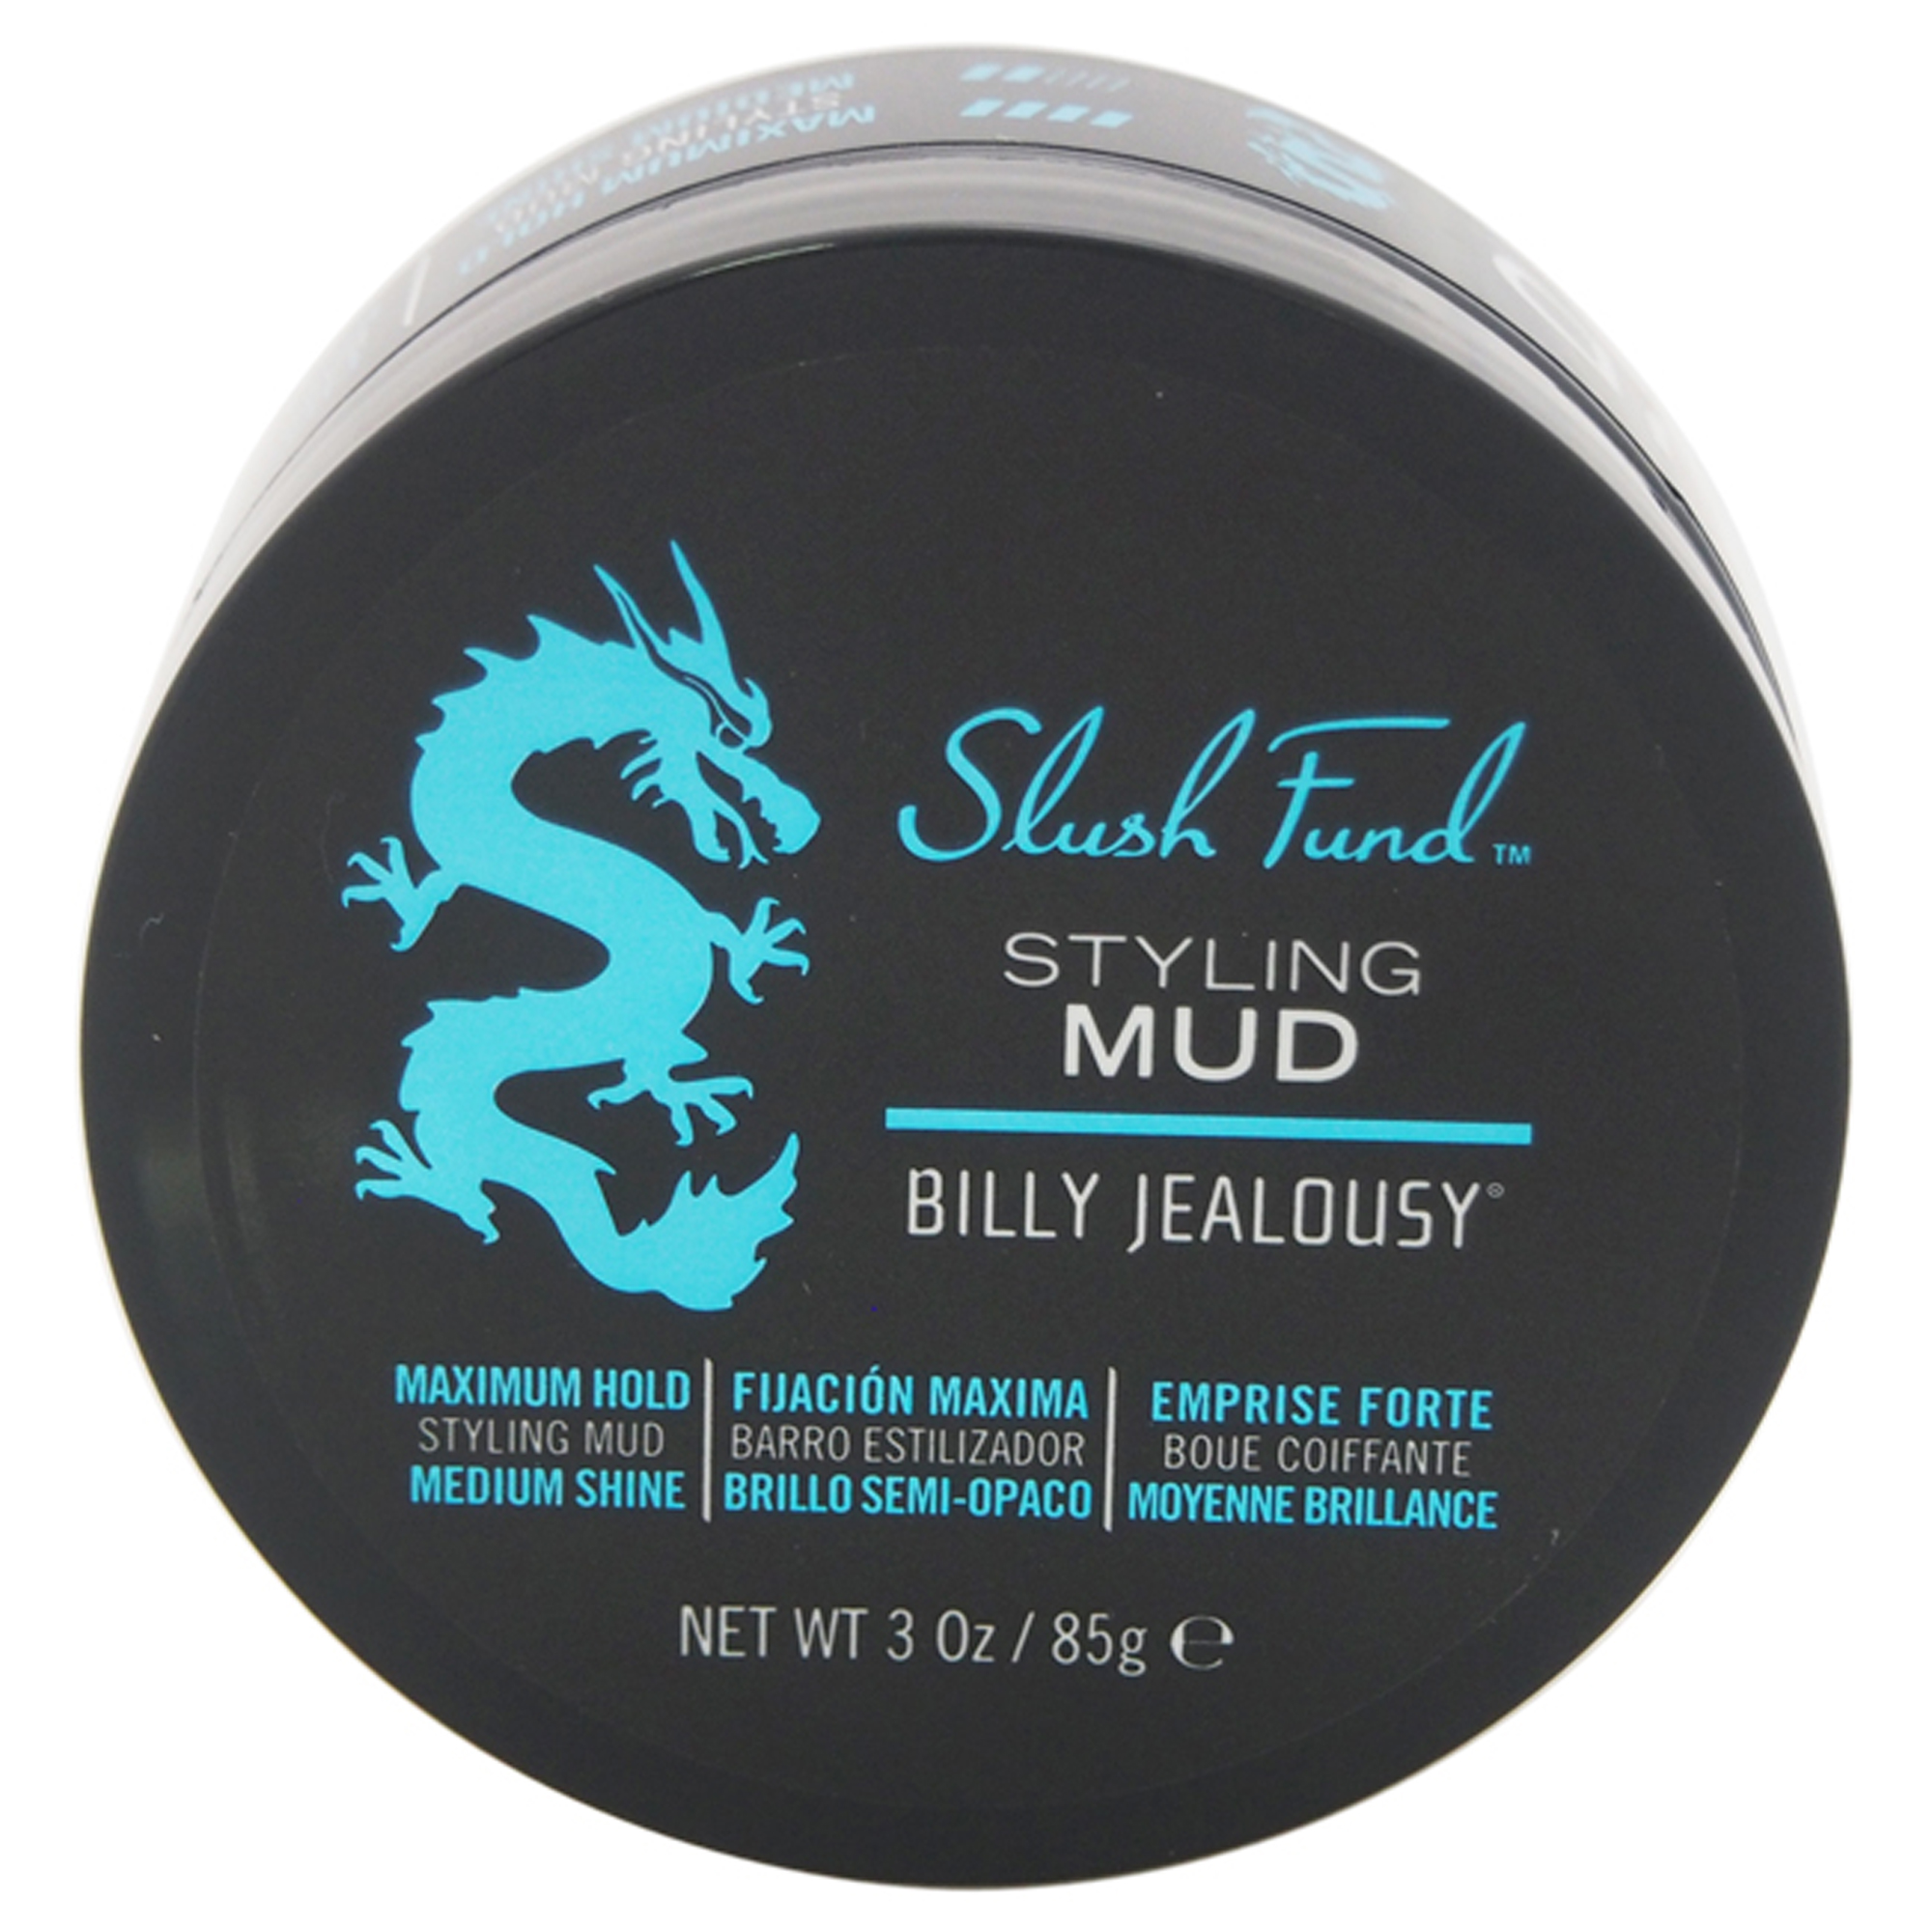 Slush Fund Styling Mud by Billy Jealousy for Men - 3 oz Wax